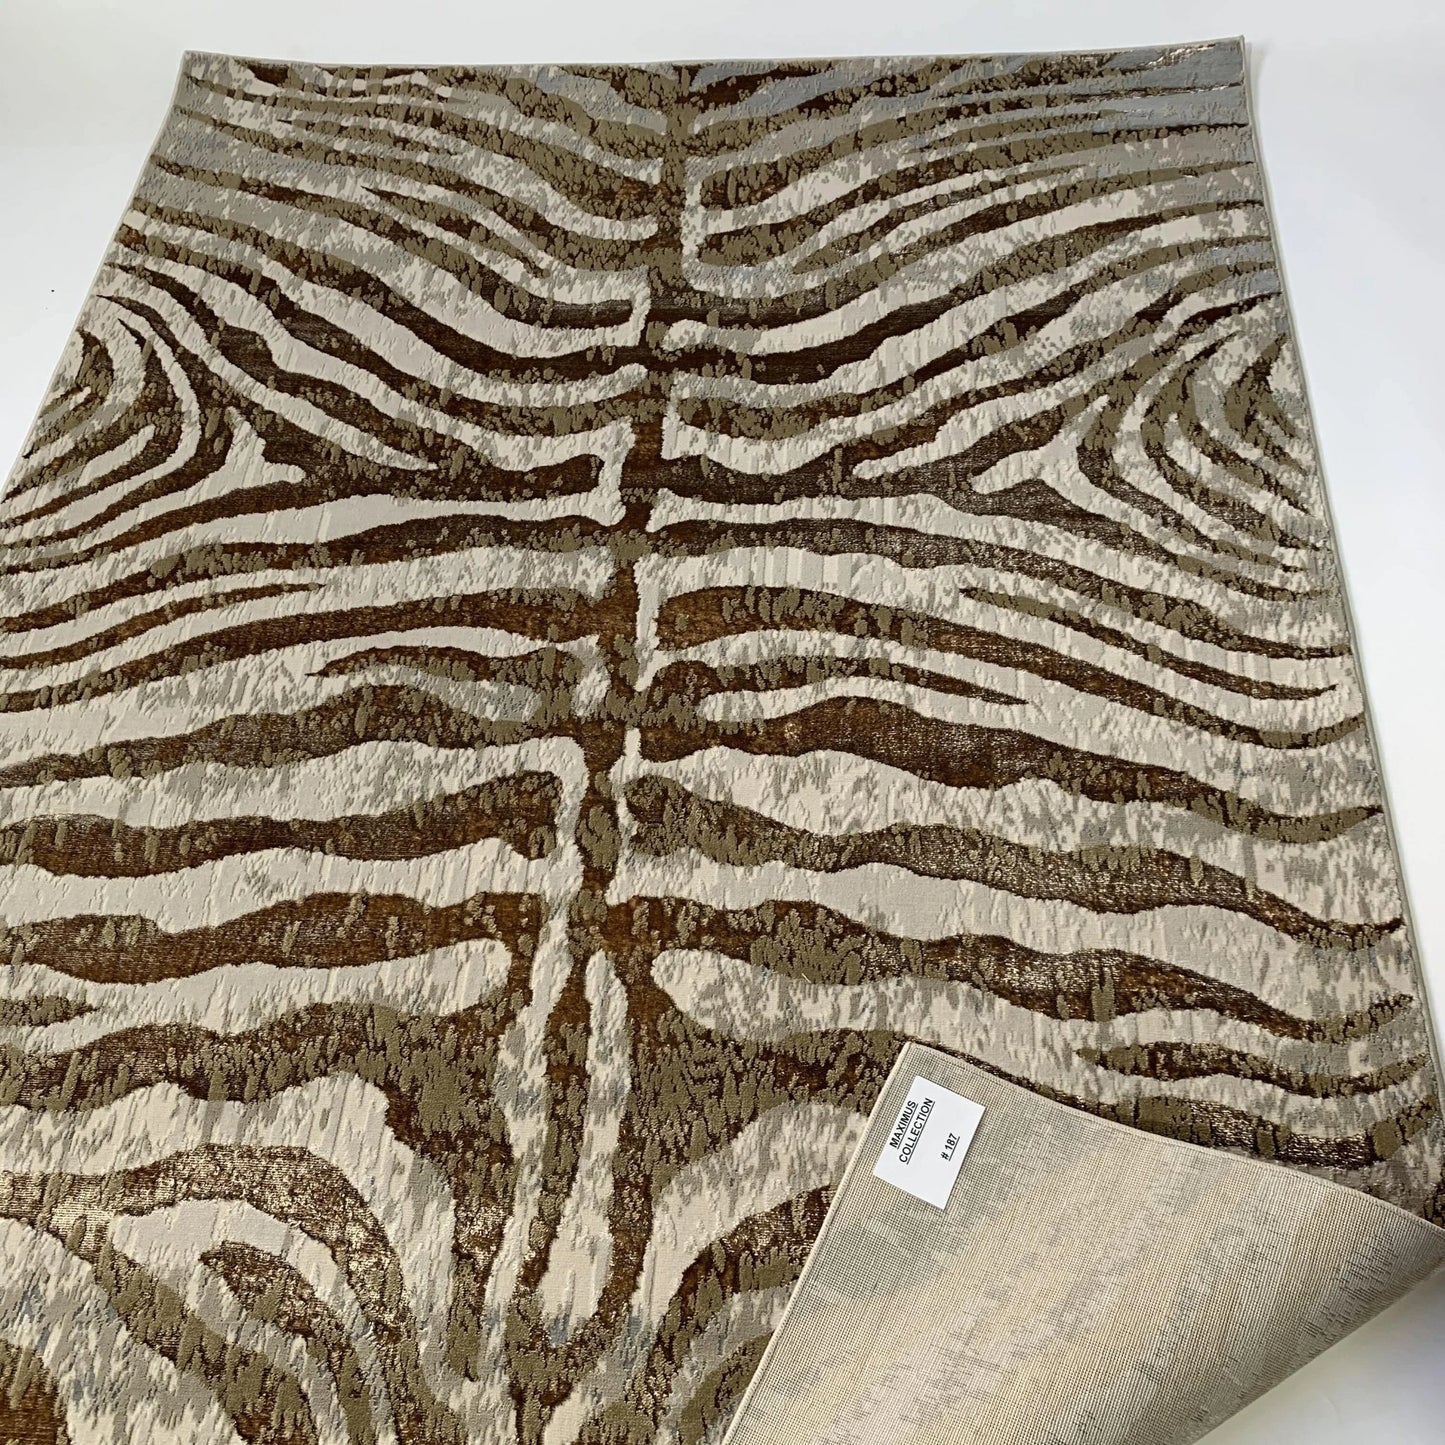 Shimmery Changing Zebra Animal Print Soft Cozy Area Rug/Carpet